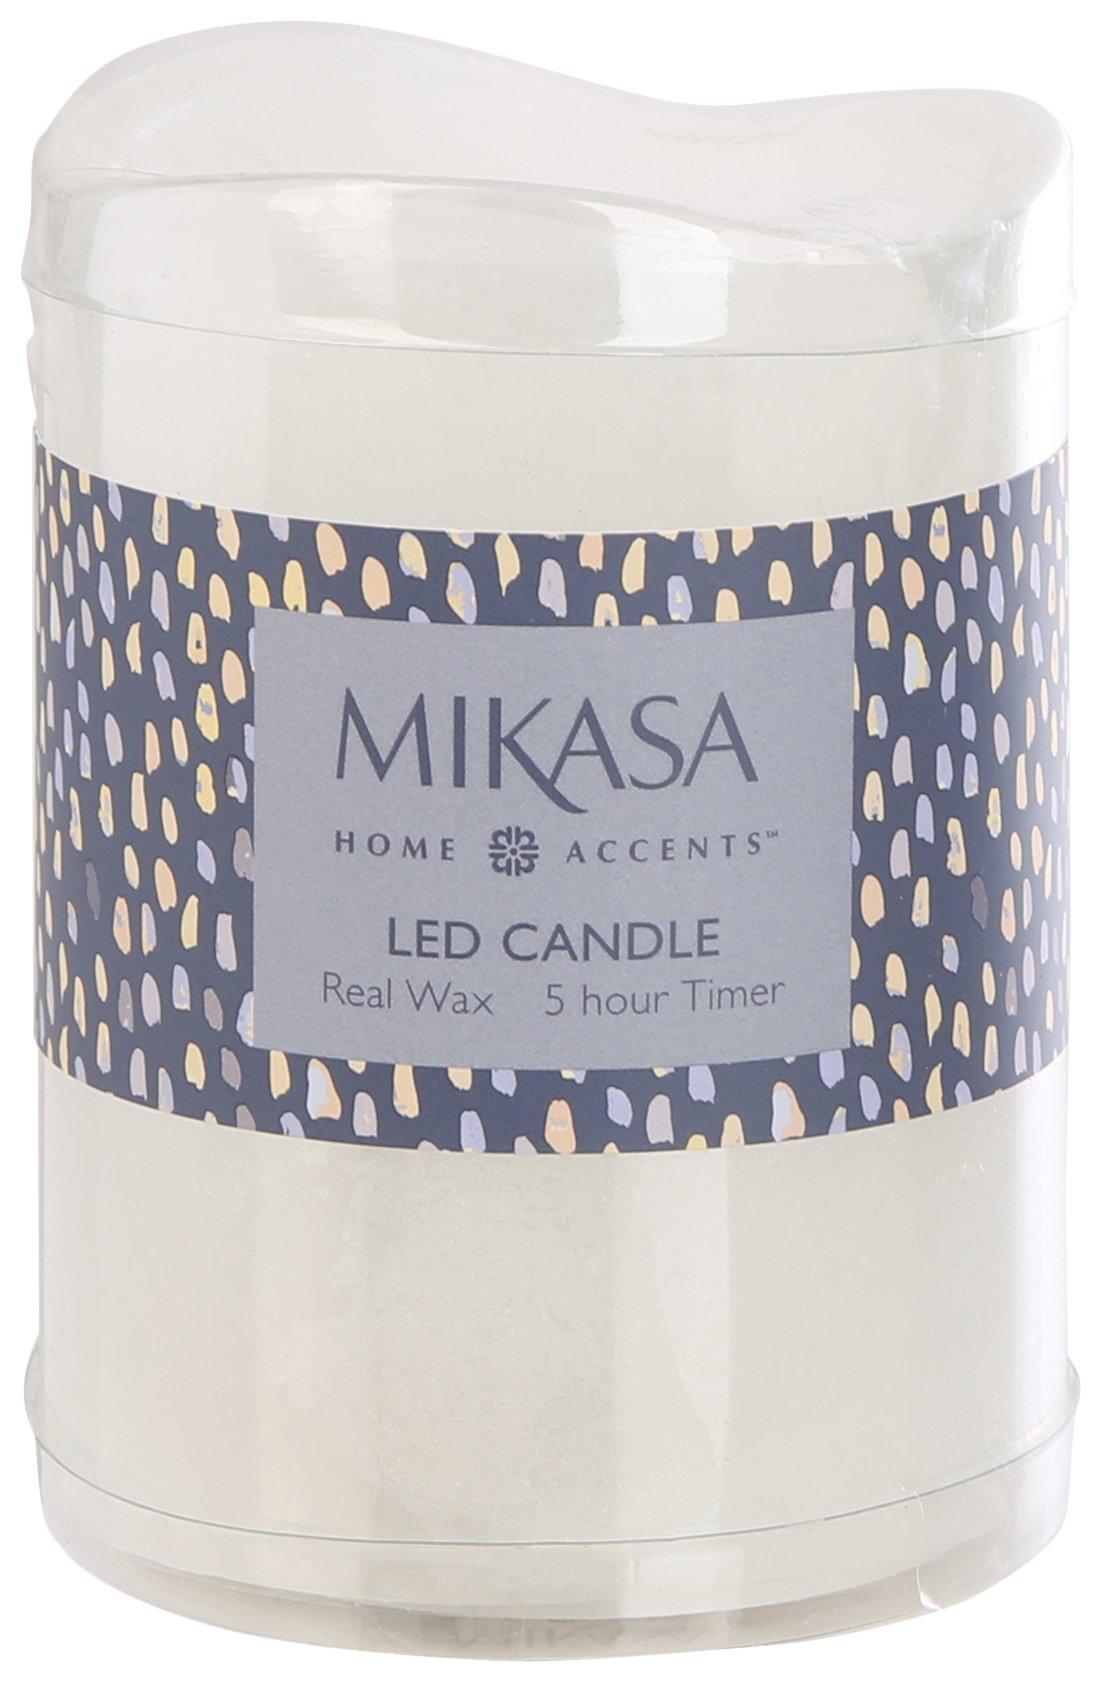 Mikasa 3x4 Solid LED Pillar Candle